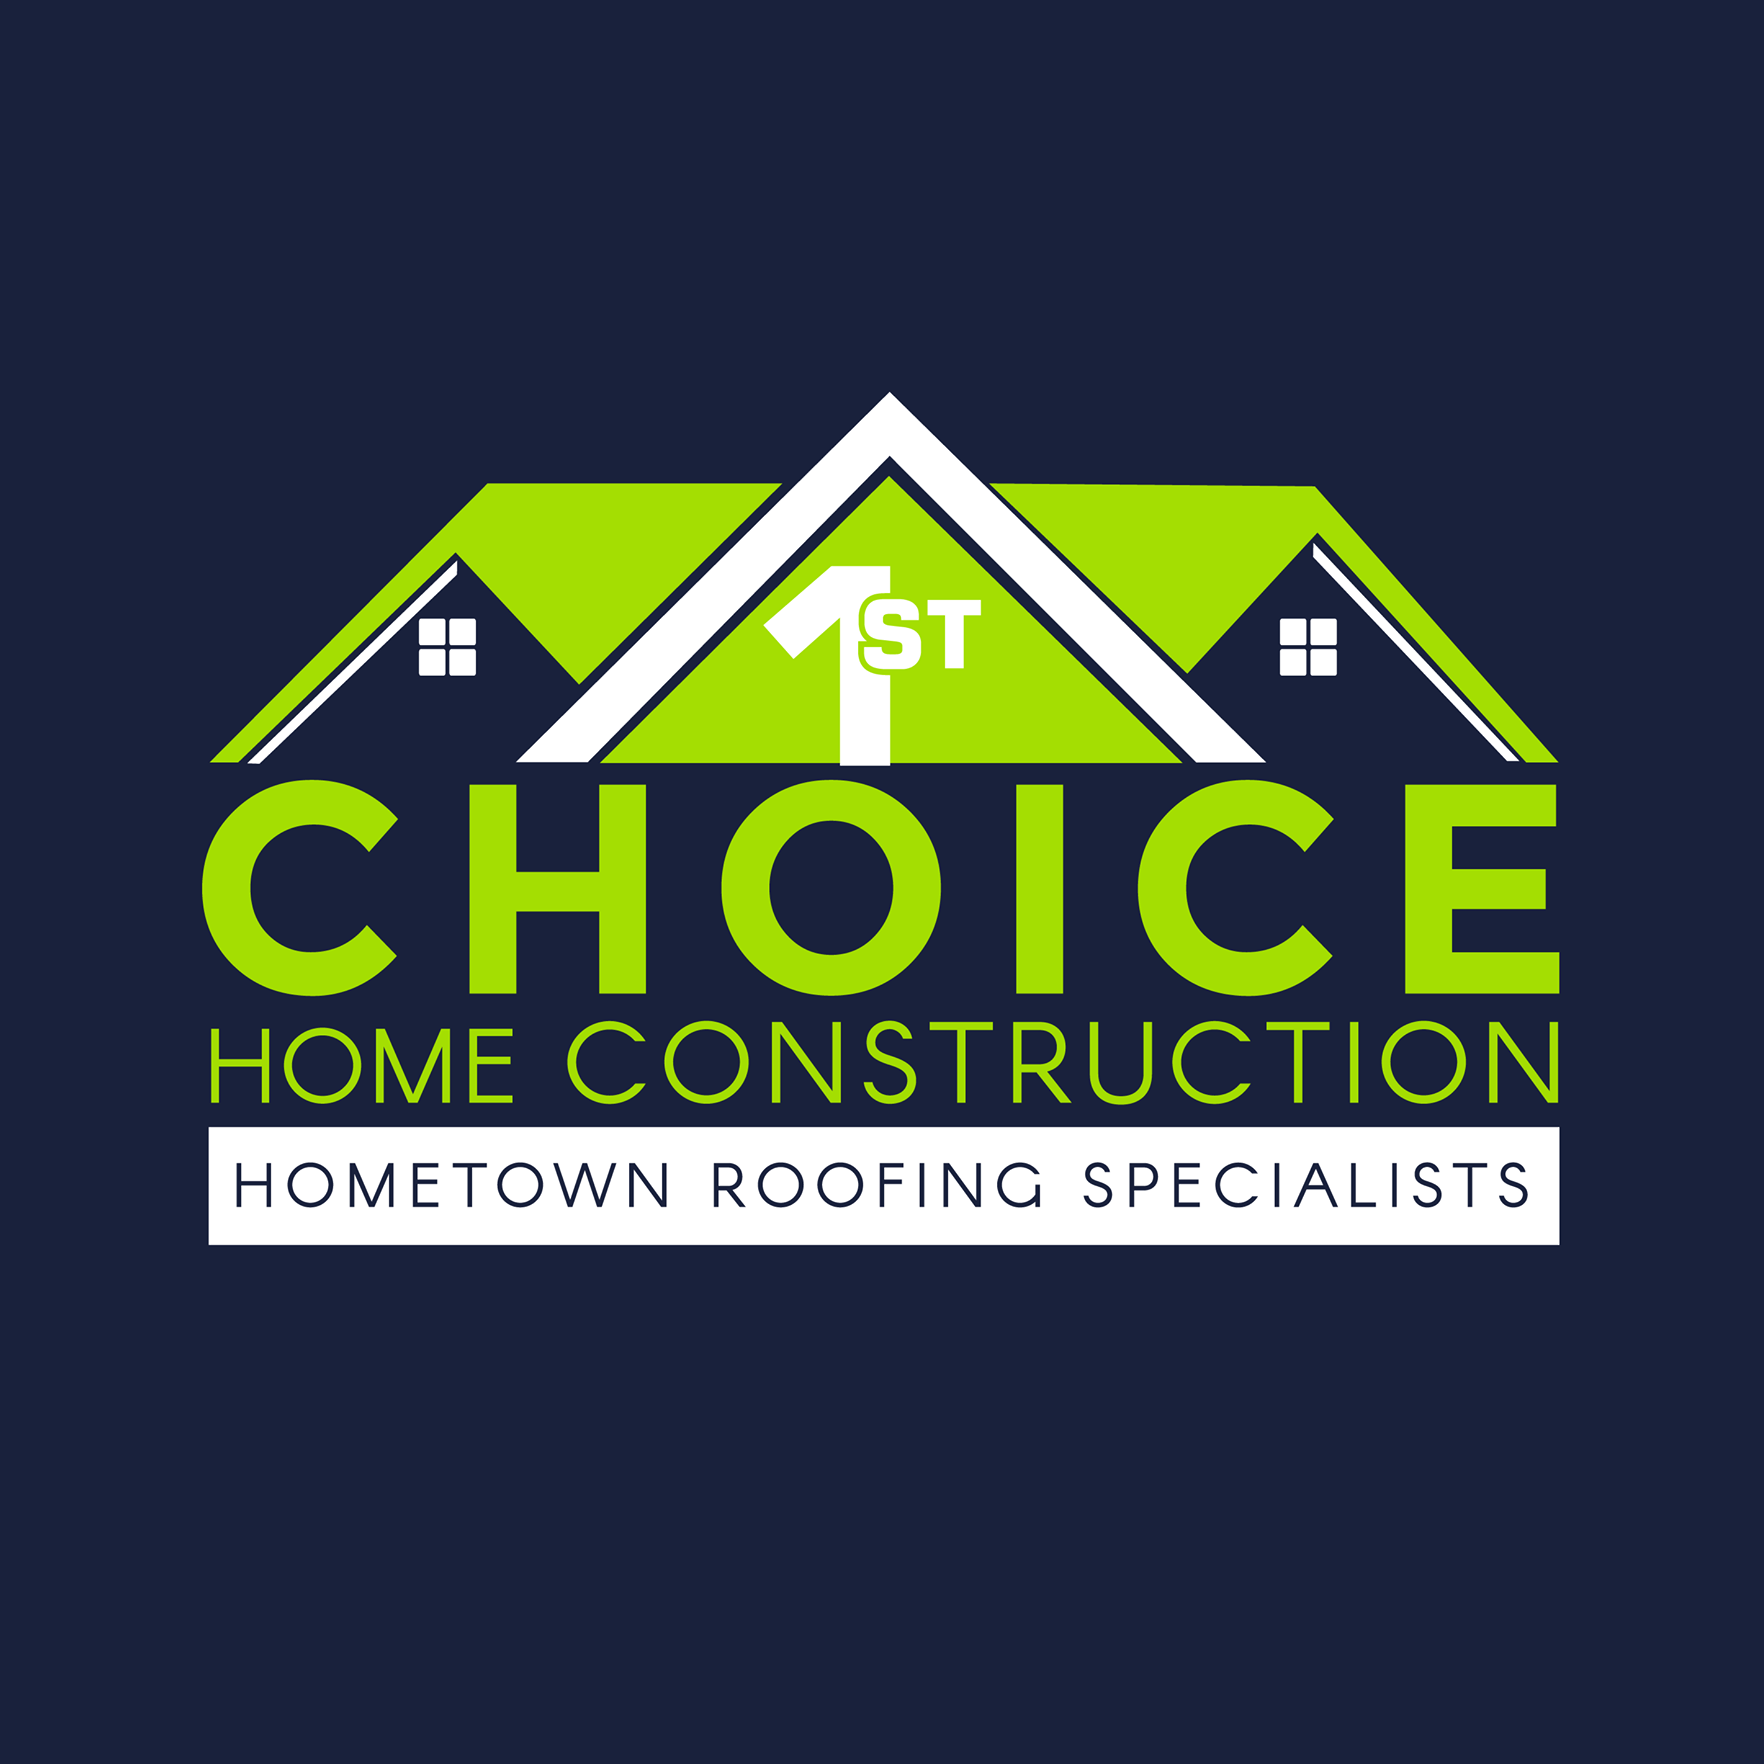 1st Choice Home Construction Co. Logo